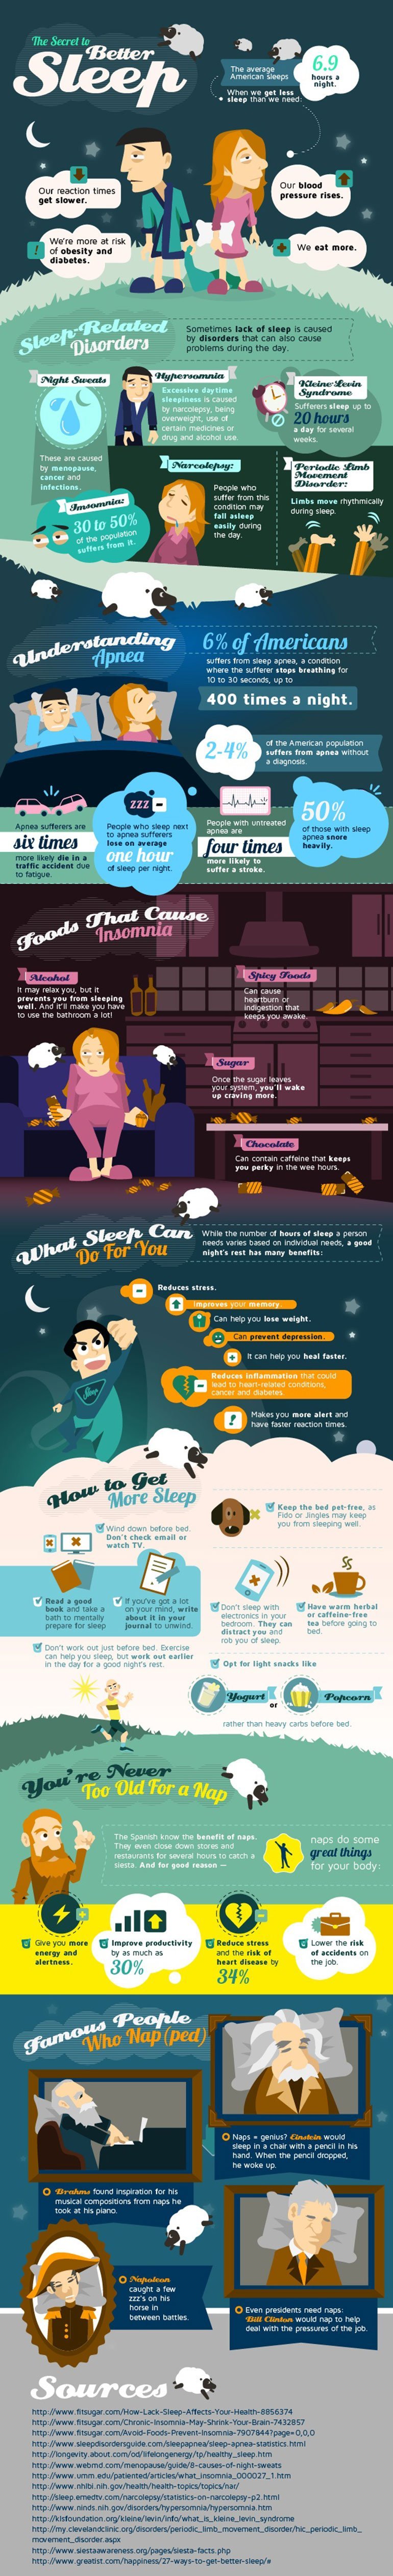 better-sleep-infographic